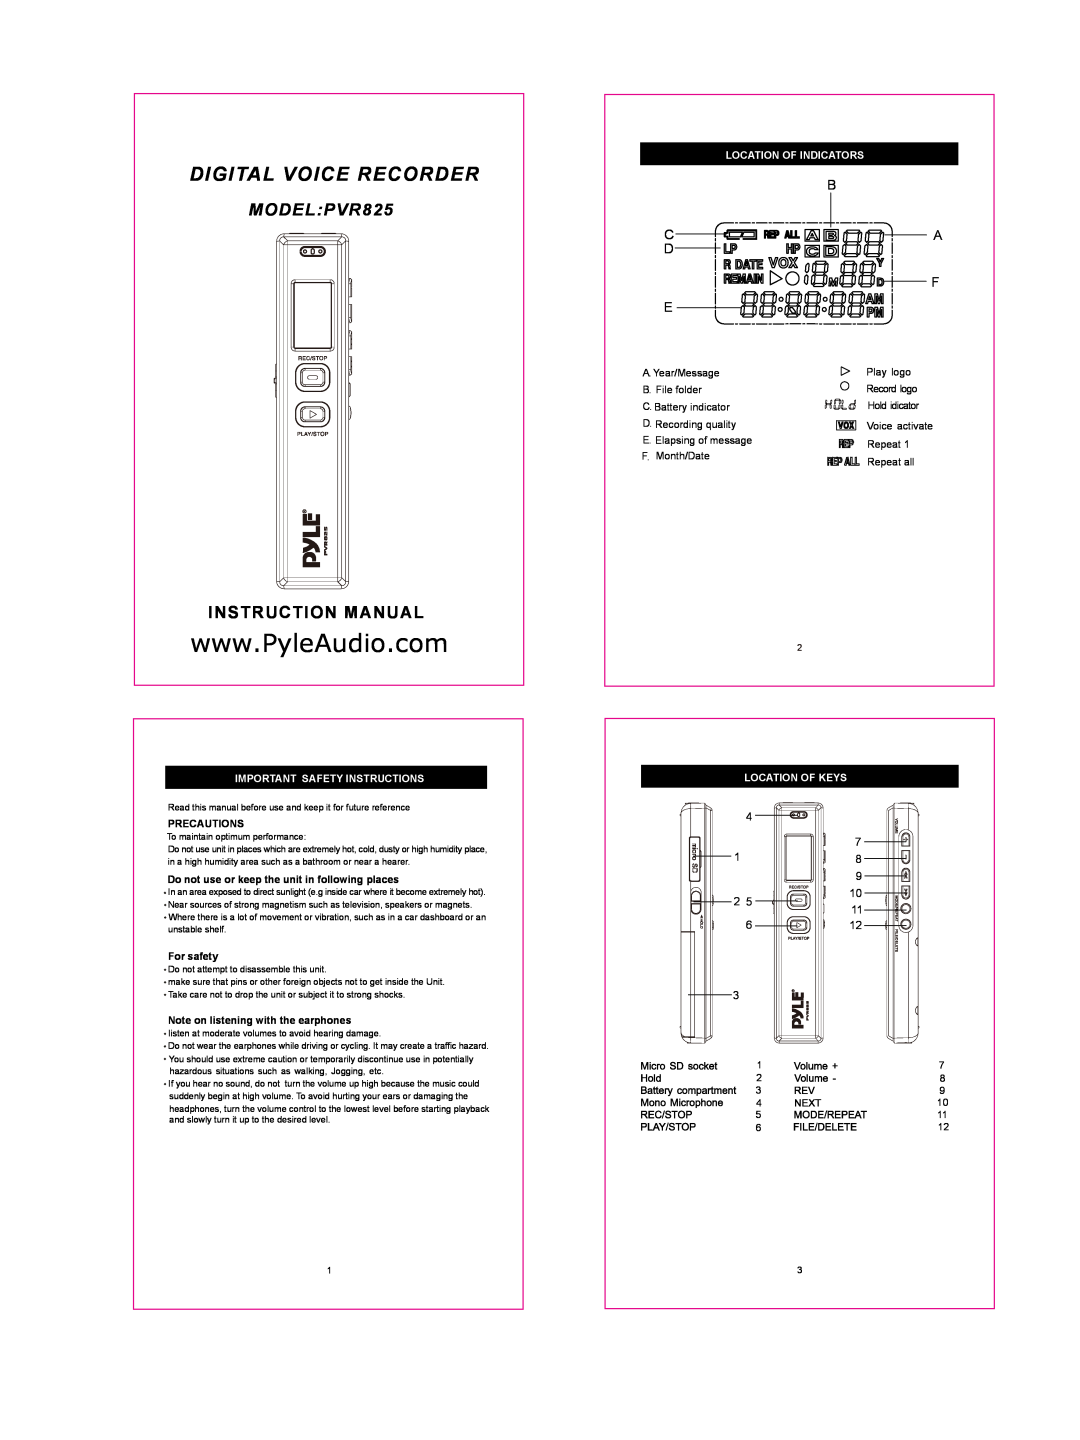 PYLE Audio instruction manual Digital Voice Recorder, MODELPVR825, Instruction Manual, Important Safety Instructions 